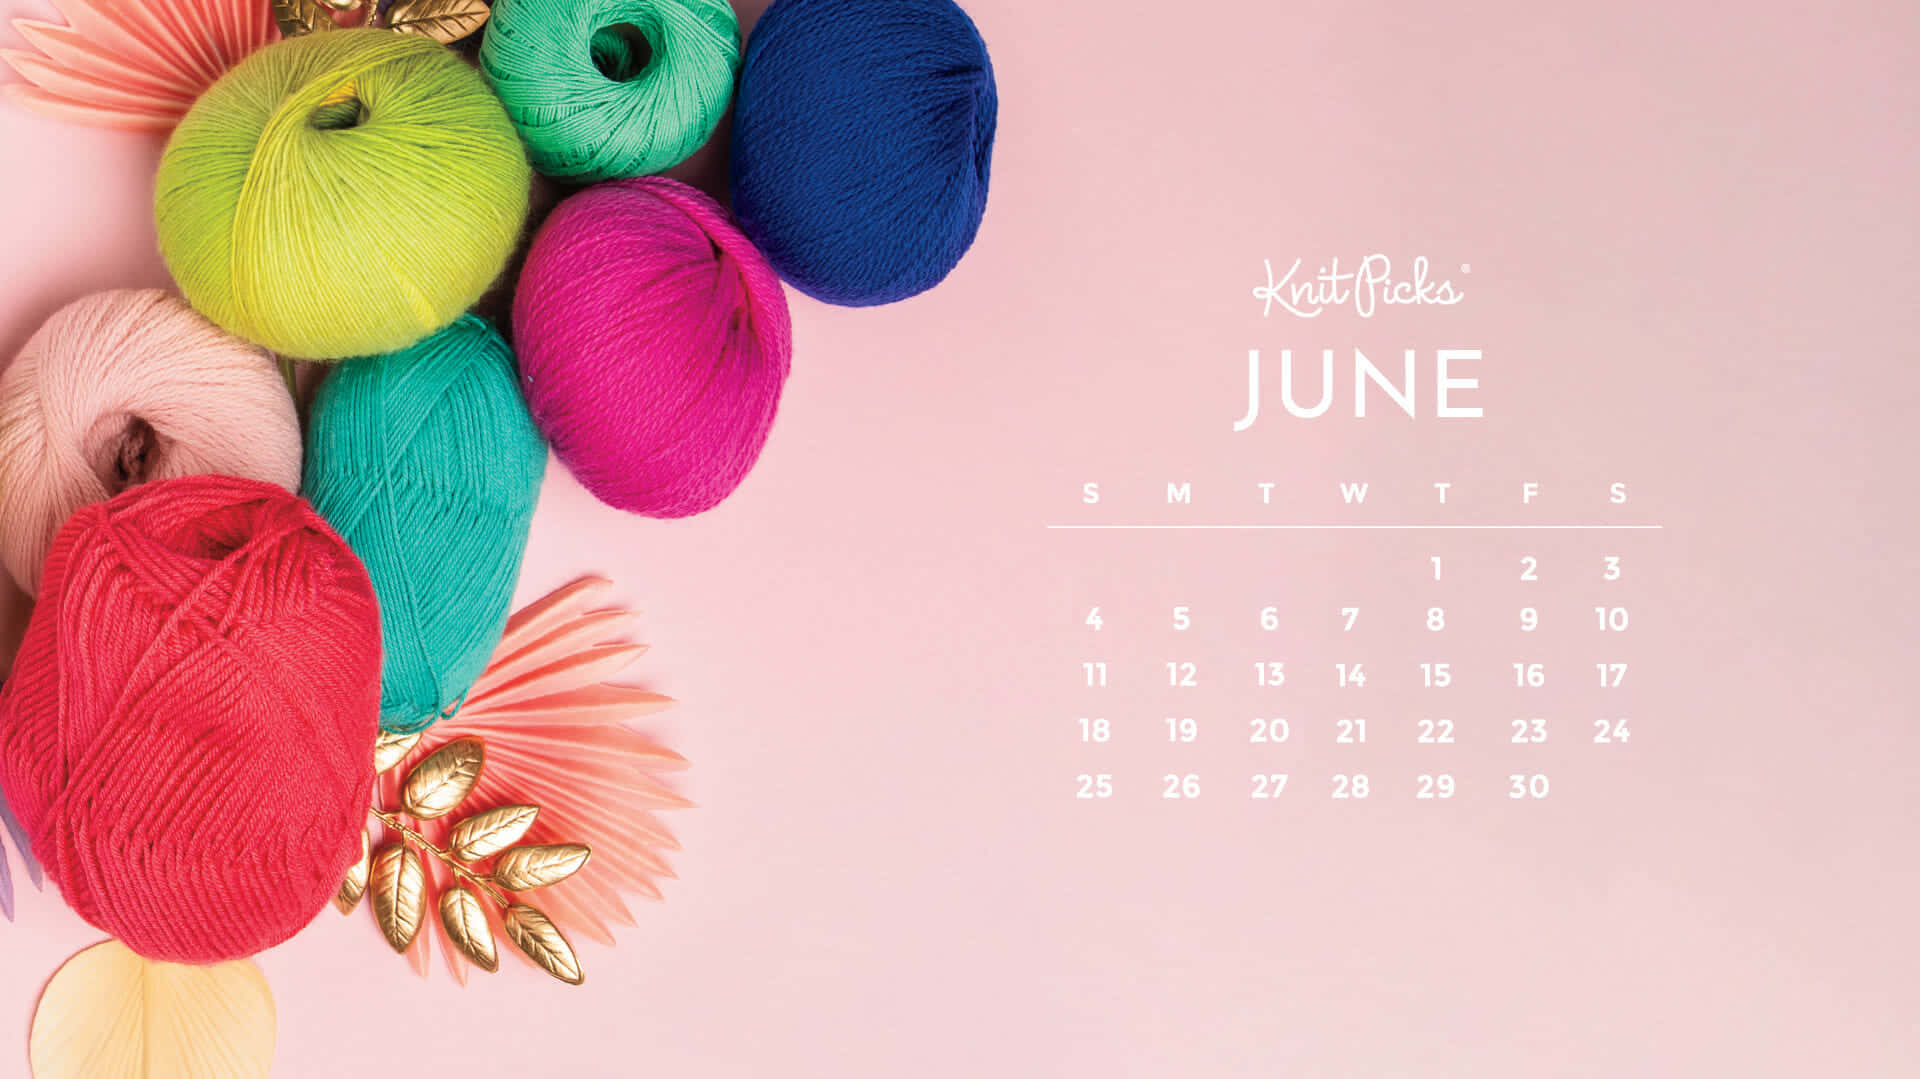 June Knitting Theme Calendar Wallpaper Wallpaper